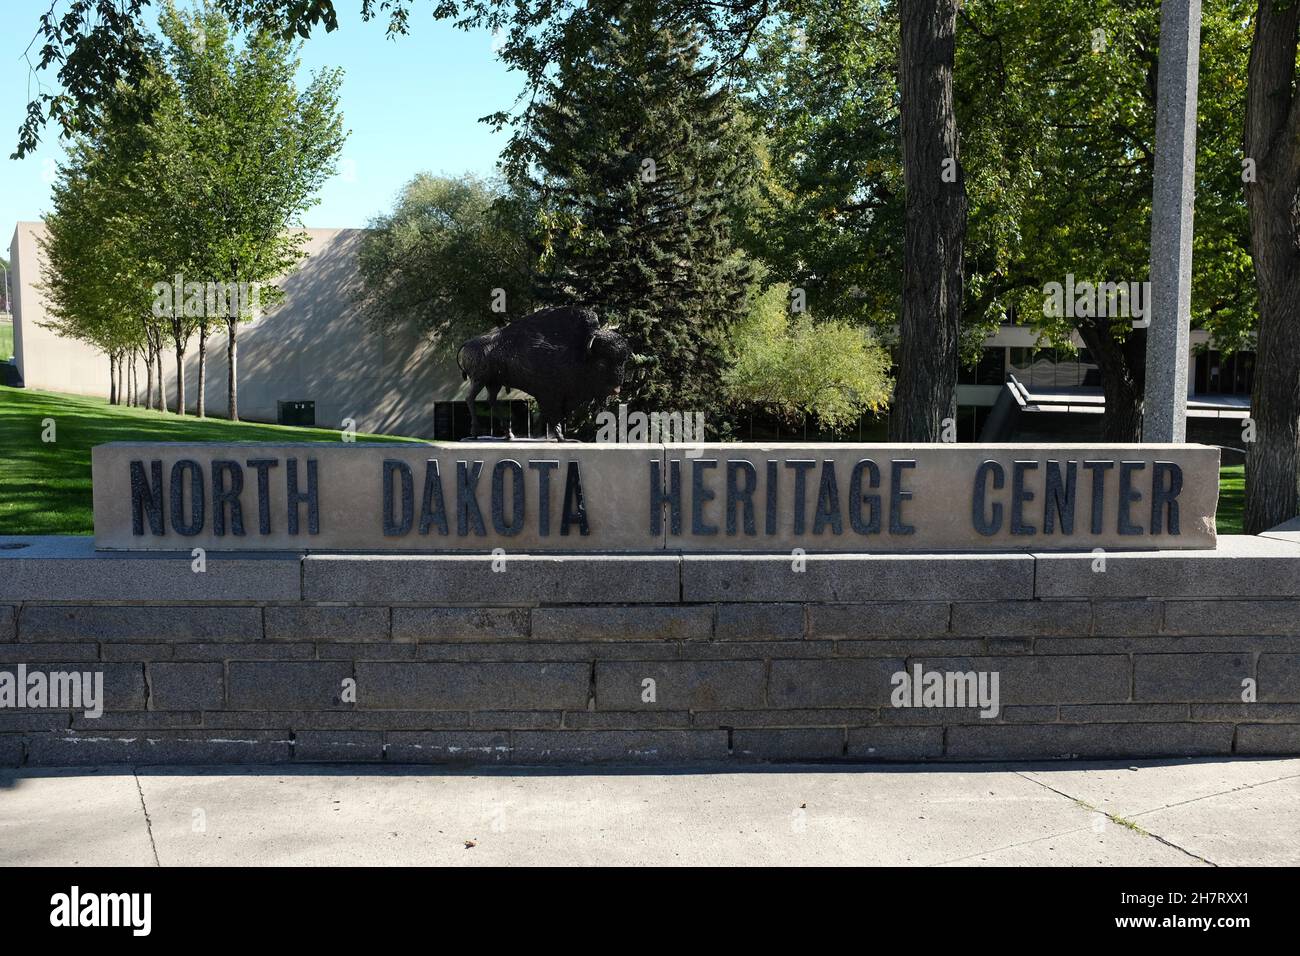 BISMARCK, NORTH DAKOTA - 2 OCT 2021: North Dakota Heritage Center sign. Stock Photo